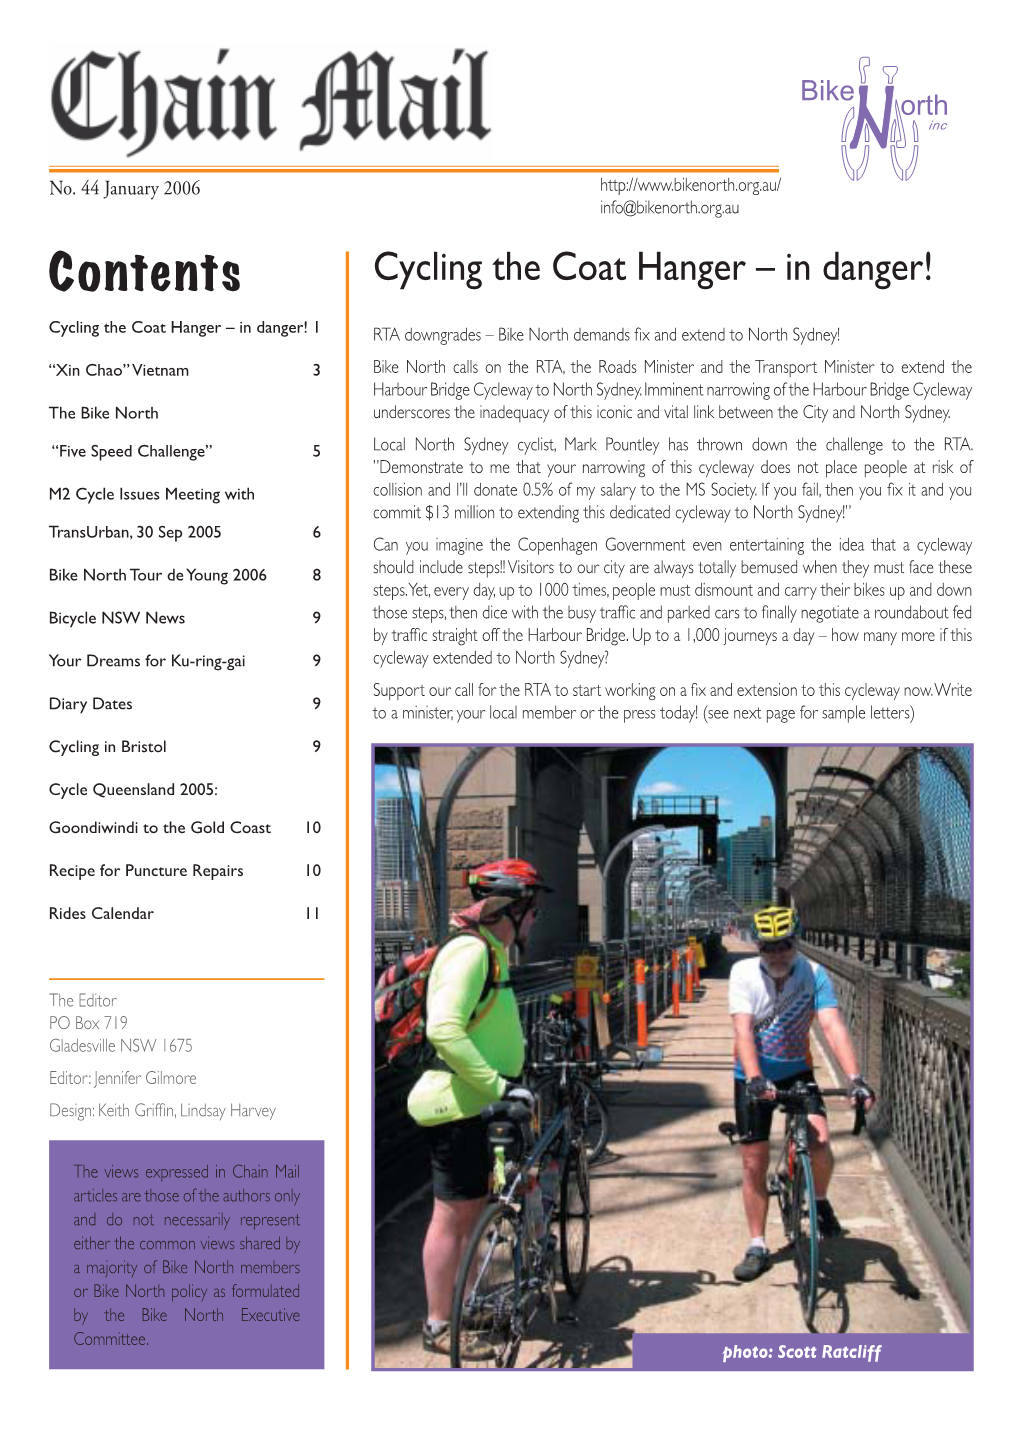 Contents Cycling the Coat Hanger – in Danger!